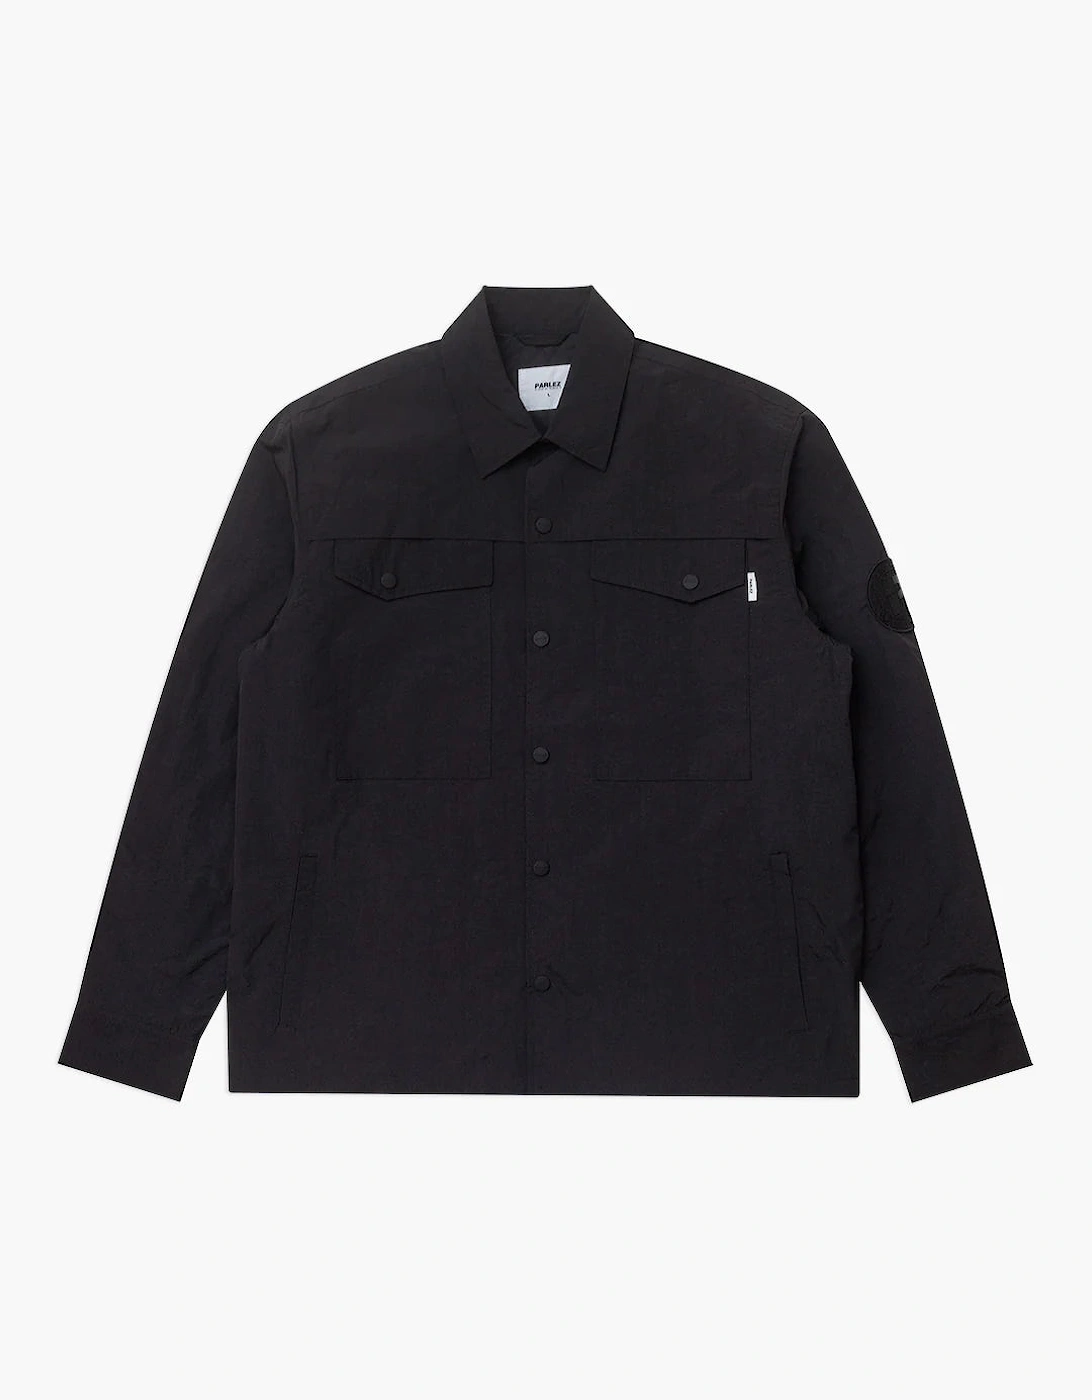 Arri Shirt - Black, 8 of 7